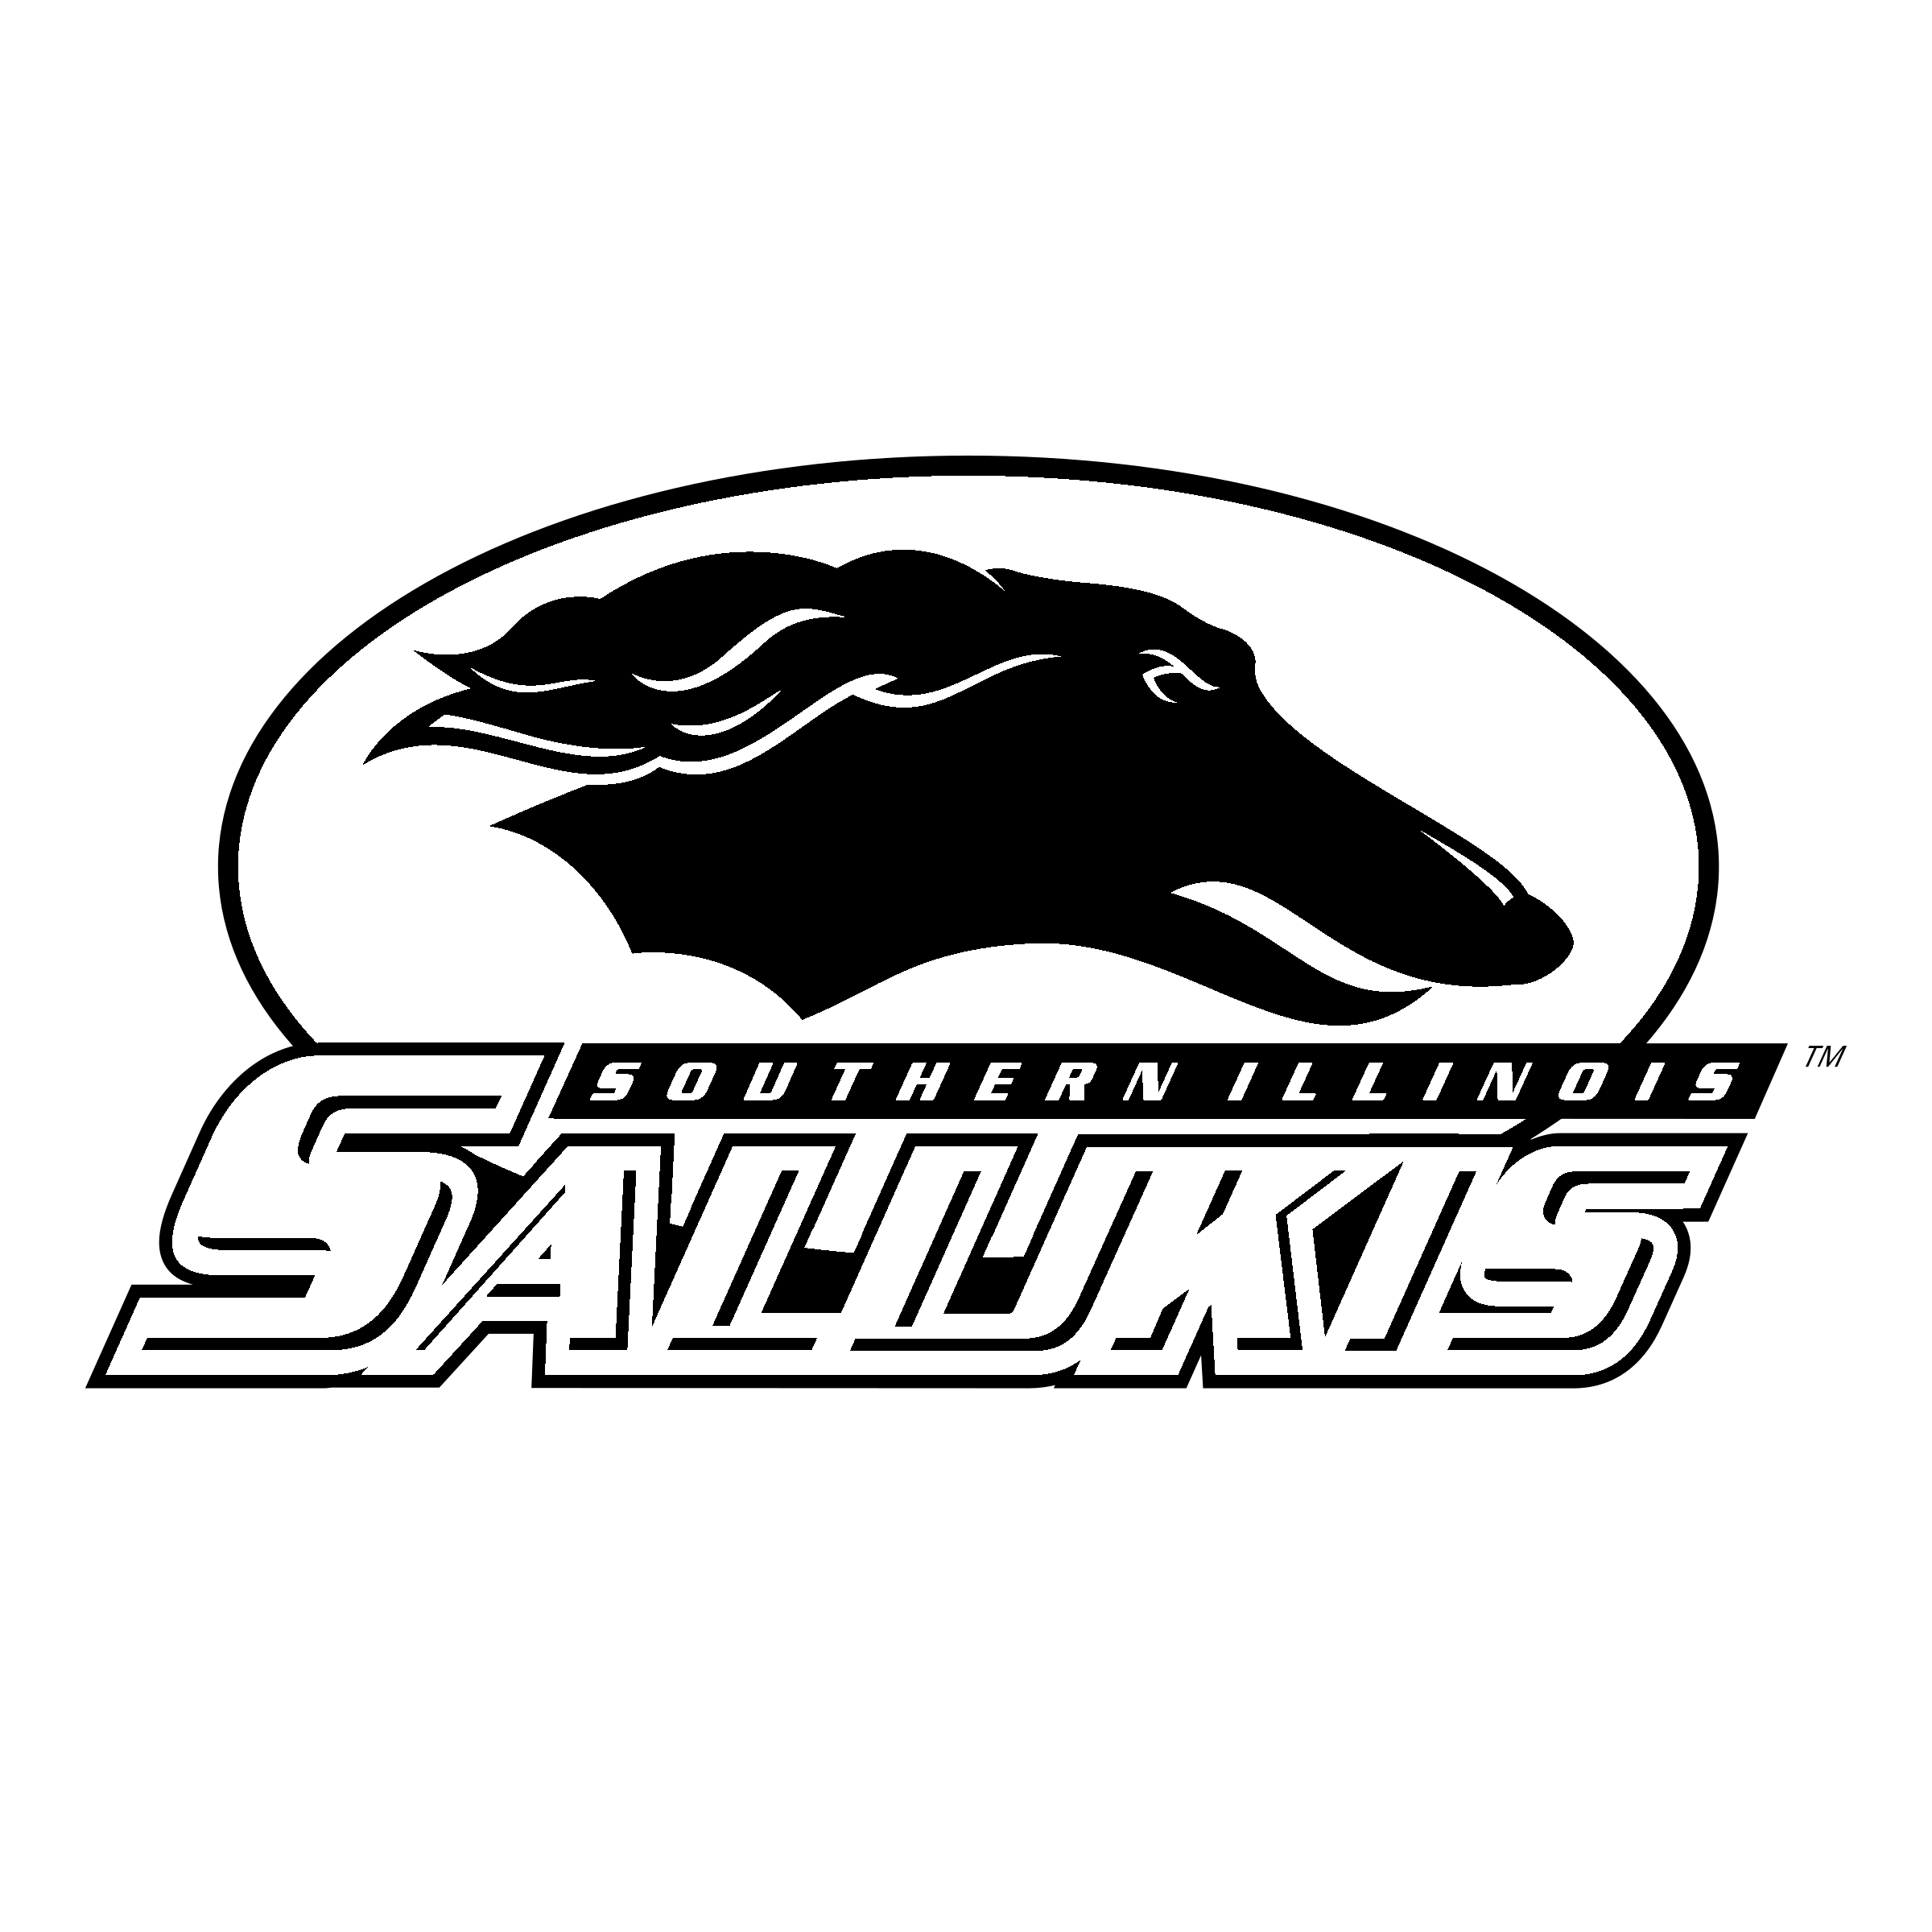 Southern Illinois Salukis Logo - Southern Illinois Salukis Logo PNG Transparent & SVG Vector ...